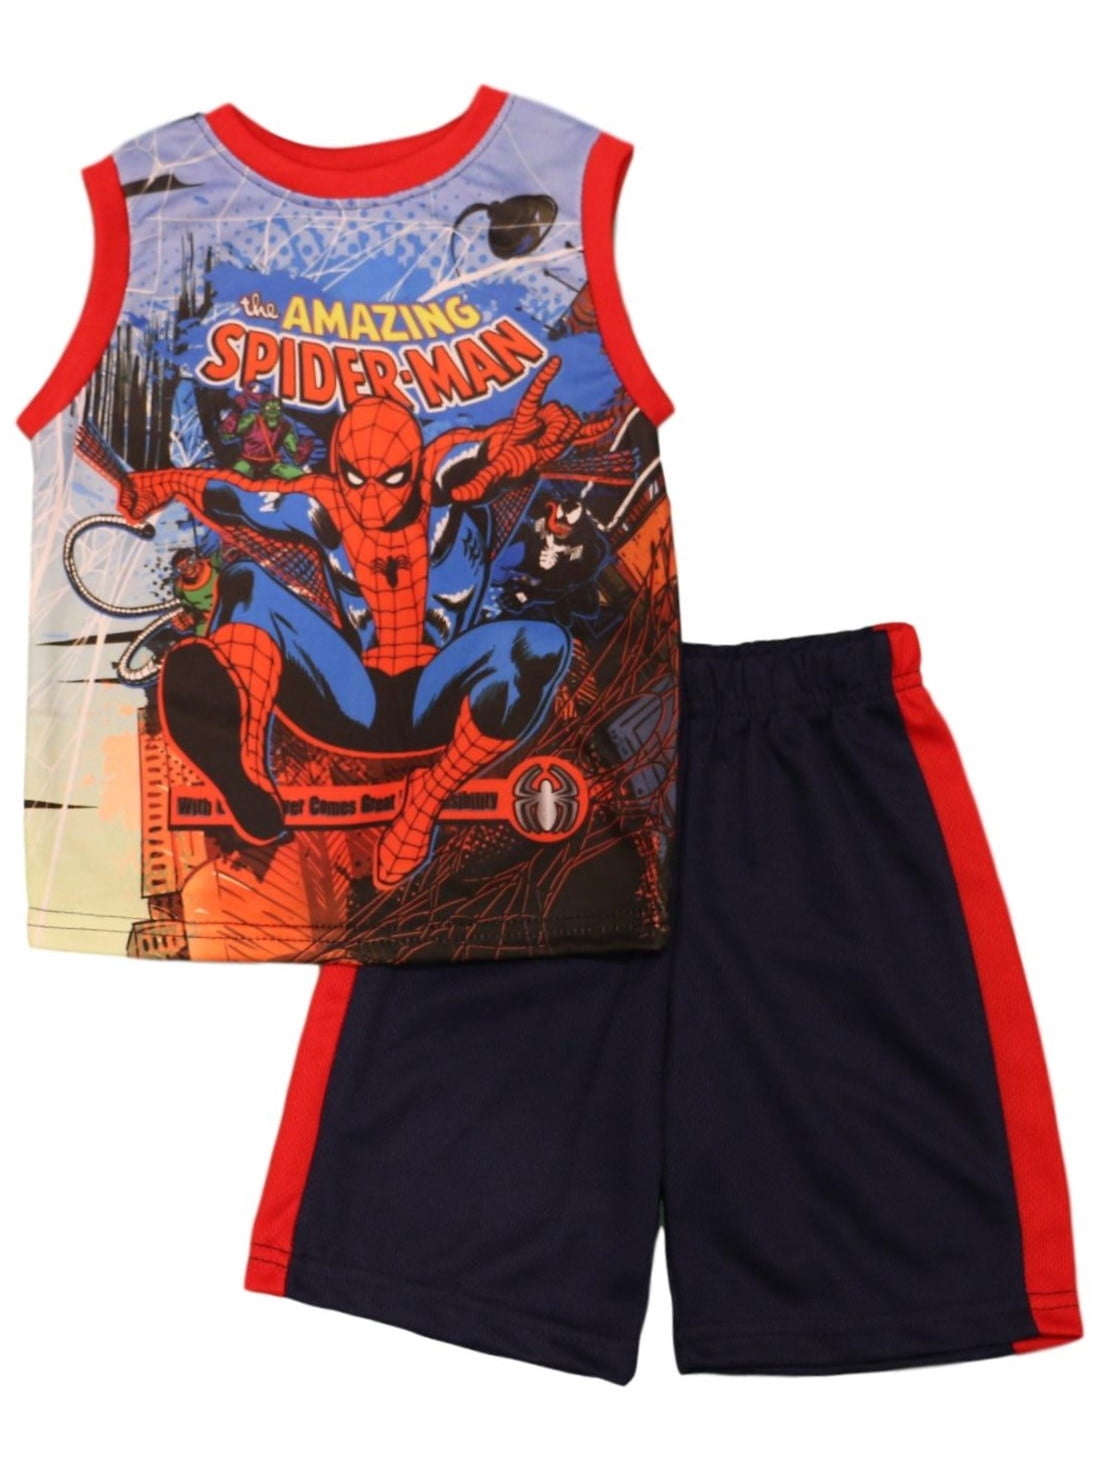 Marvel - Spiderman Toddler Boys' Sublimated Shorts Set (3T) - Walmart